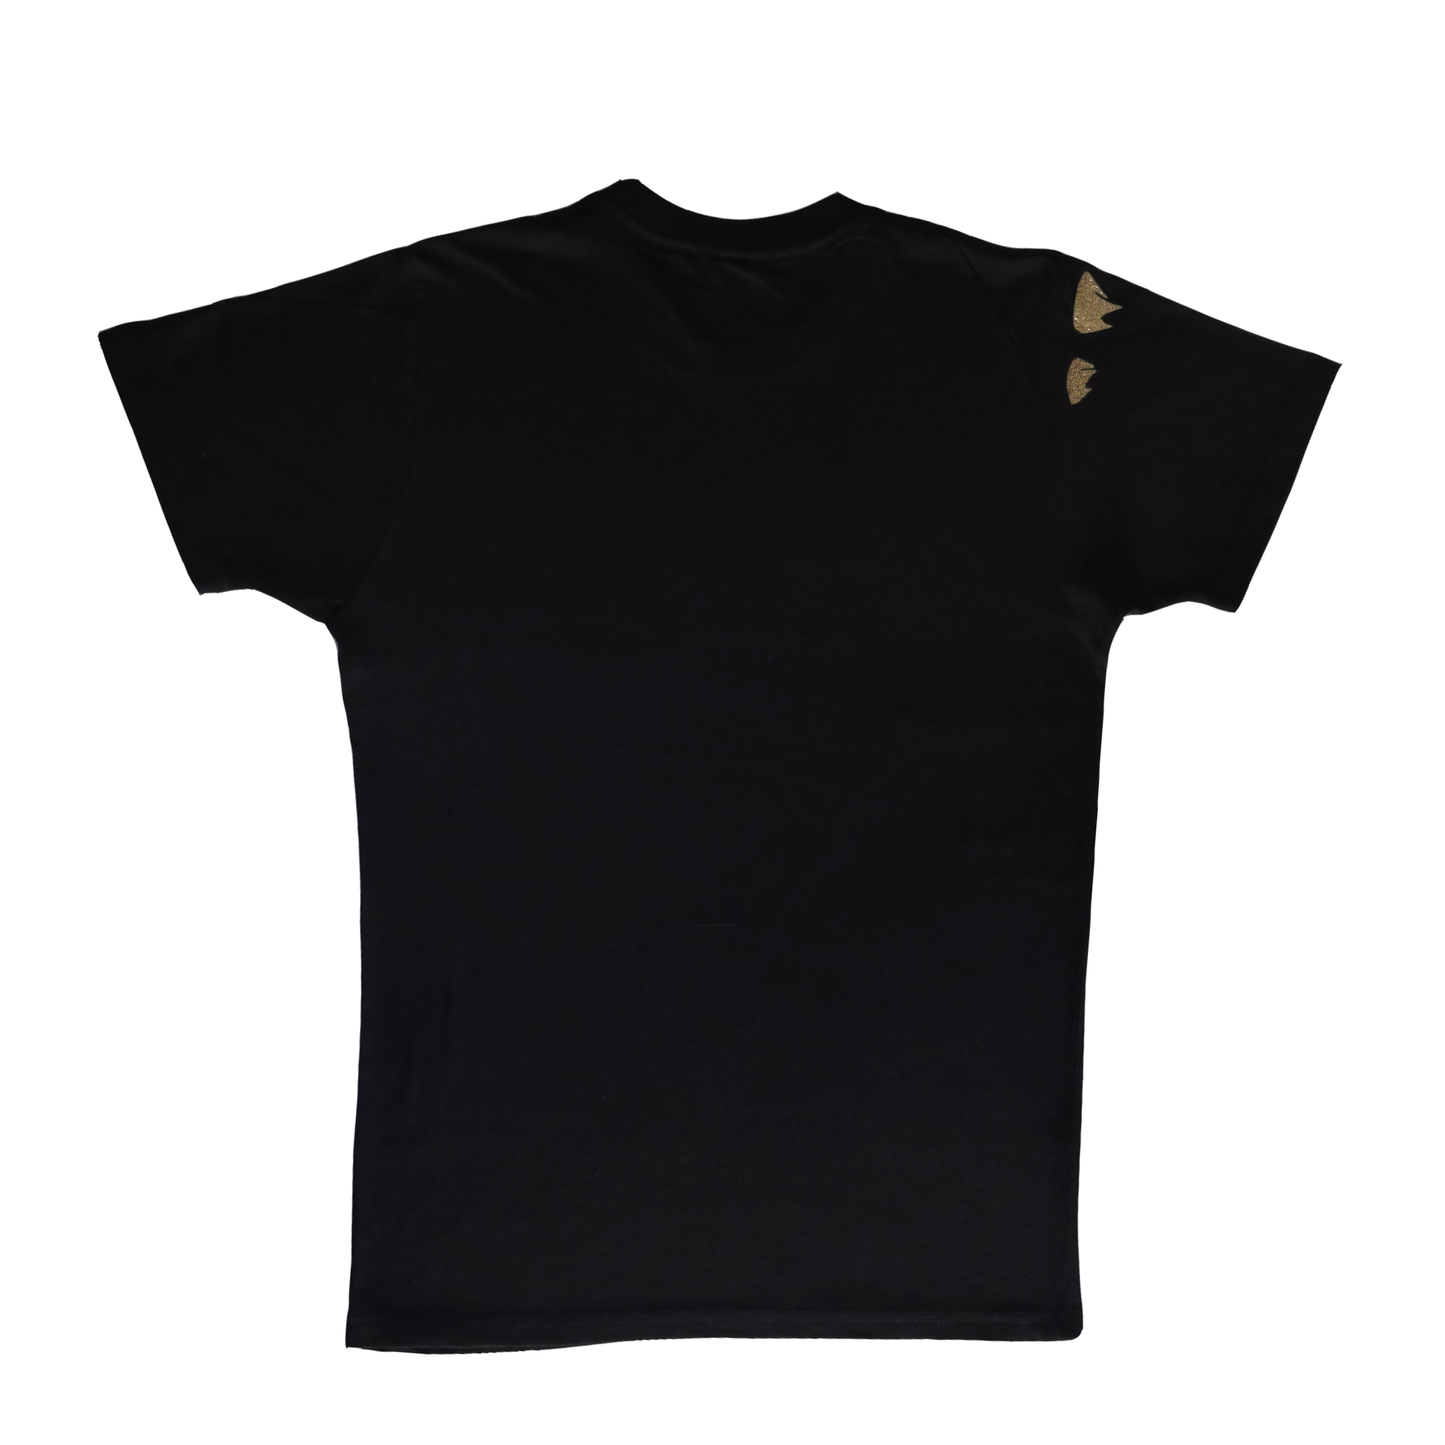 Hypnotik Rhythmz Luxury Streetwear Couture T-Shirt gold & black